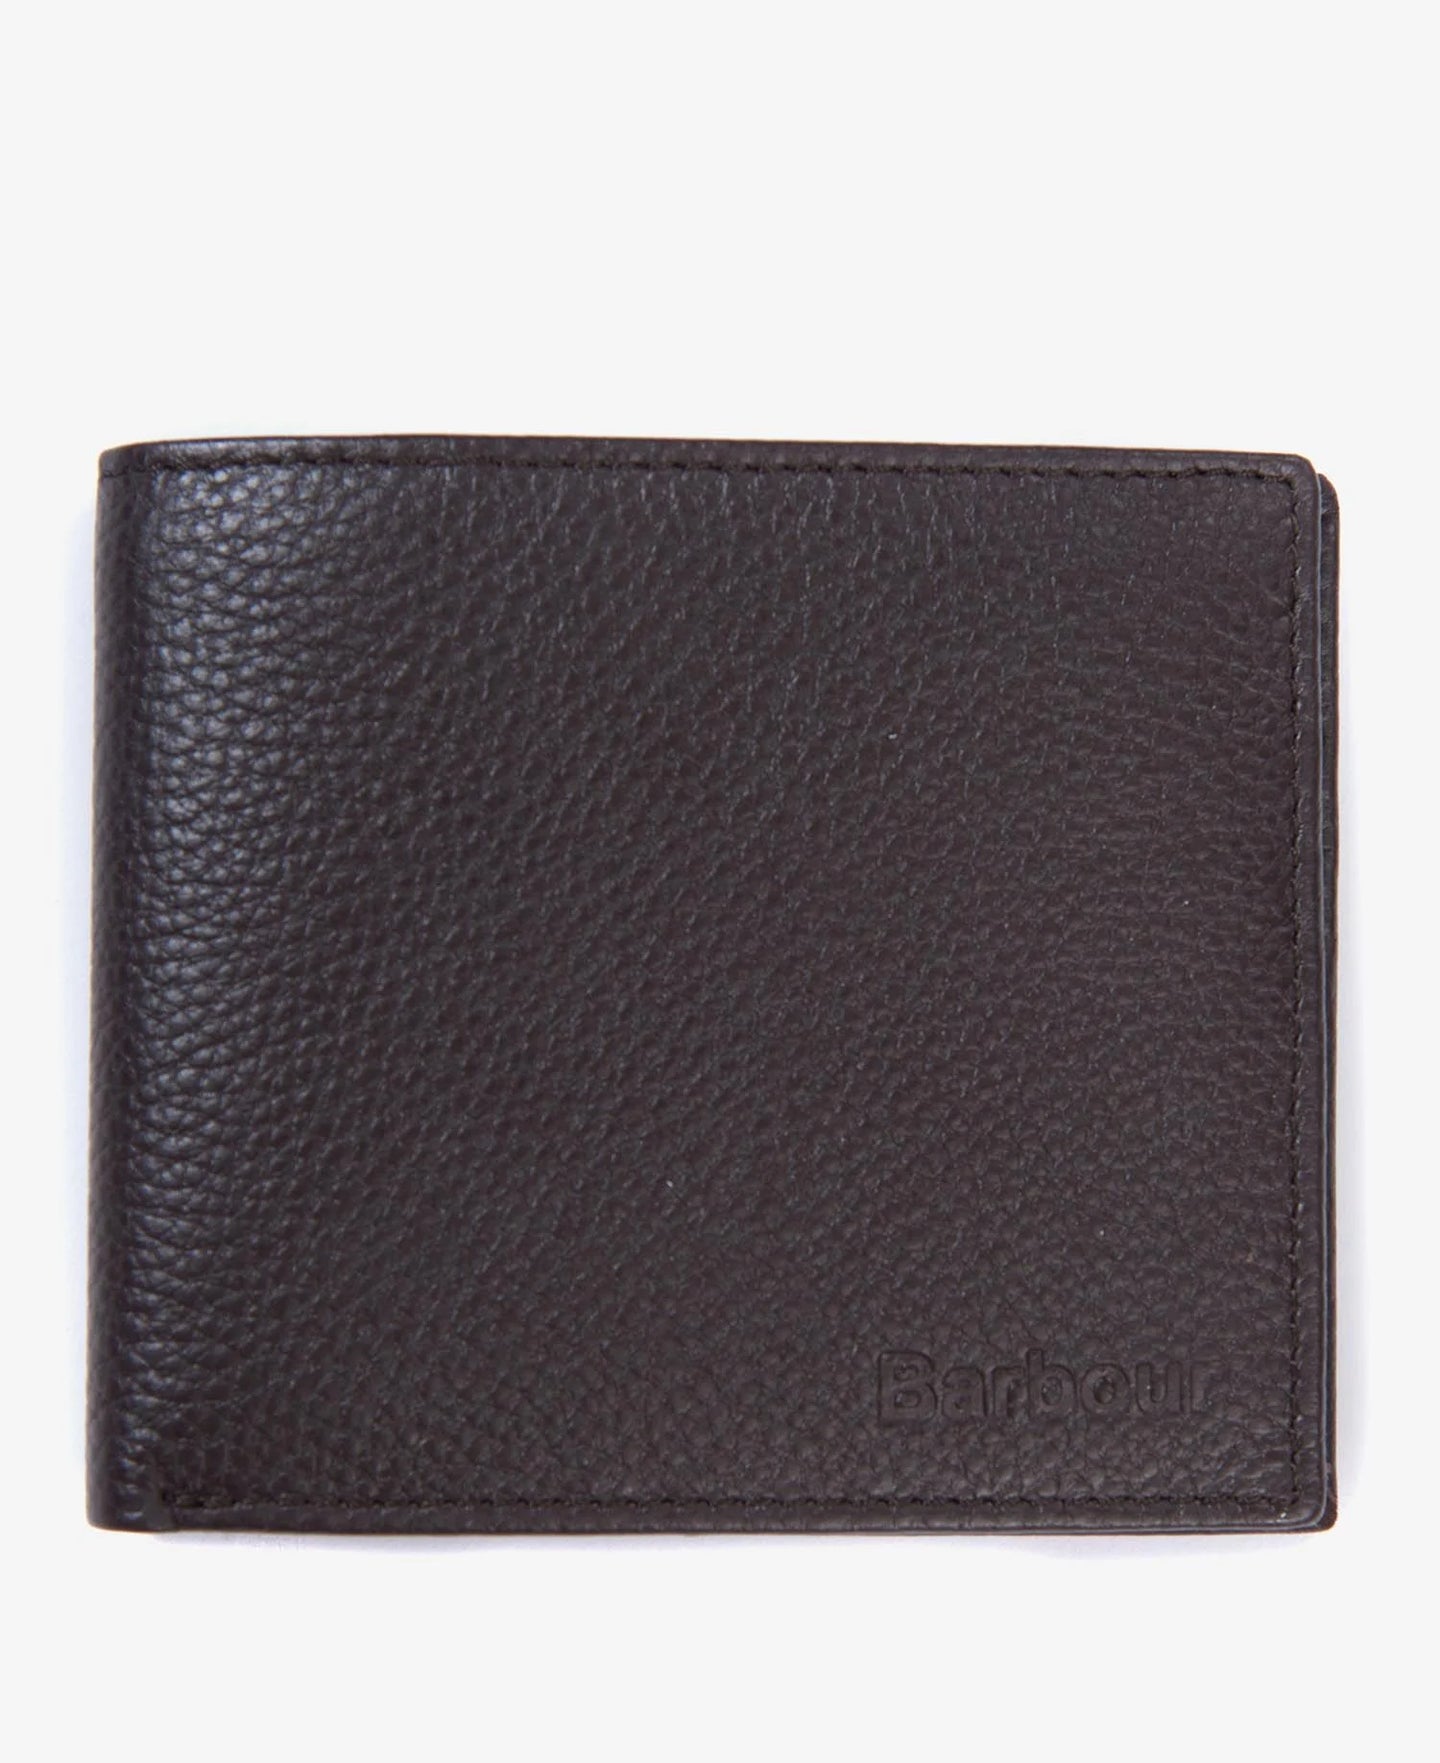 Barbour MLG0007 BR71 | Amble Leather Billfold Wallet in Dark Brown